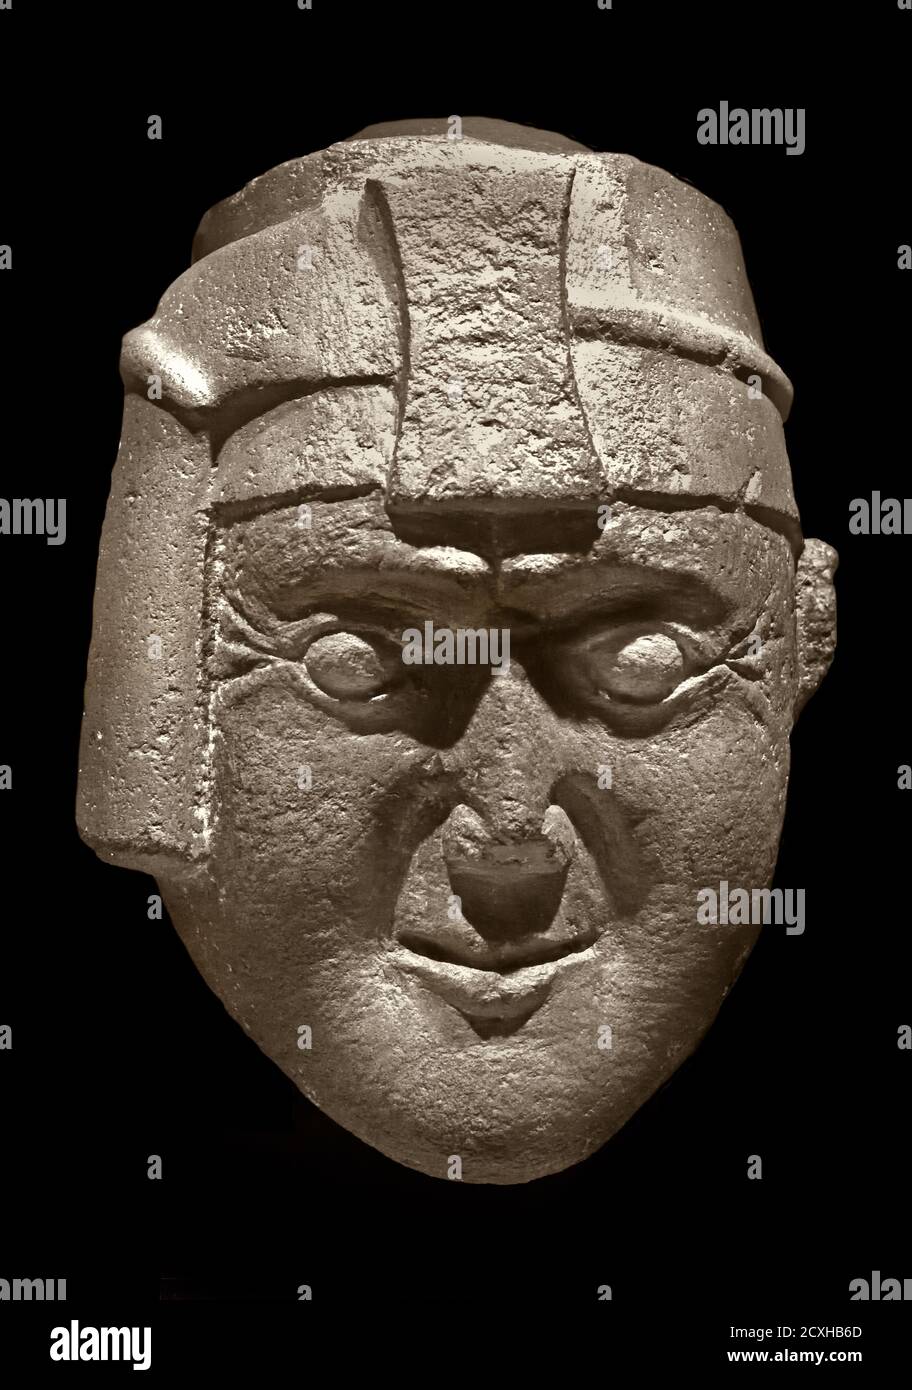 Testa inca con lawt'u e maskapaycha - mascaipacha o borla (simbolo o potere imperiale). 1400-1533 Inca Viracocha. Perù, peruviano, America, americano, Foto Stock